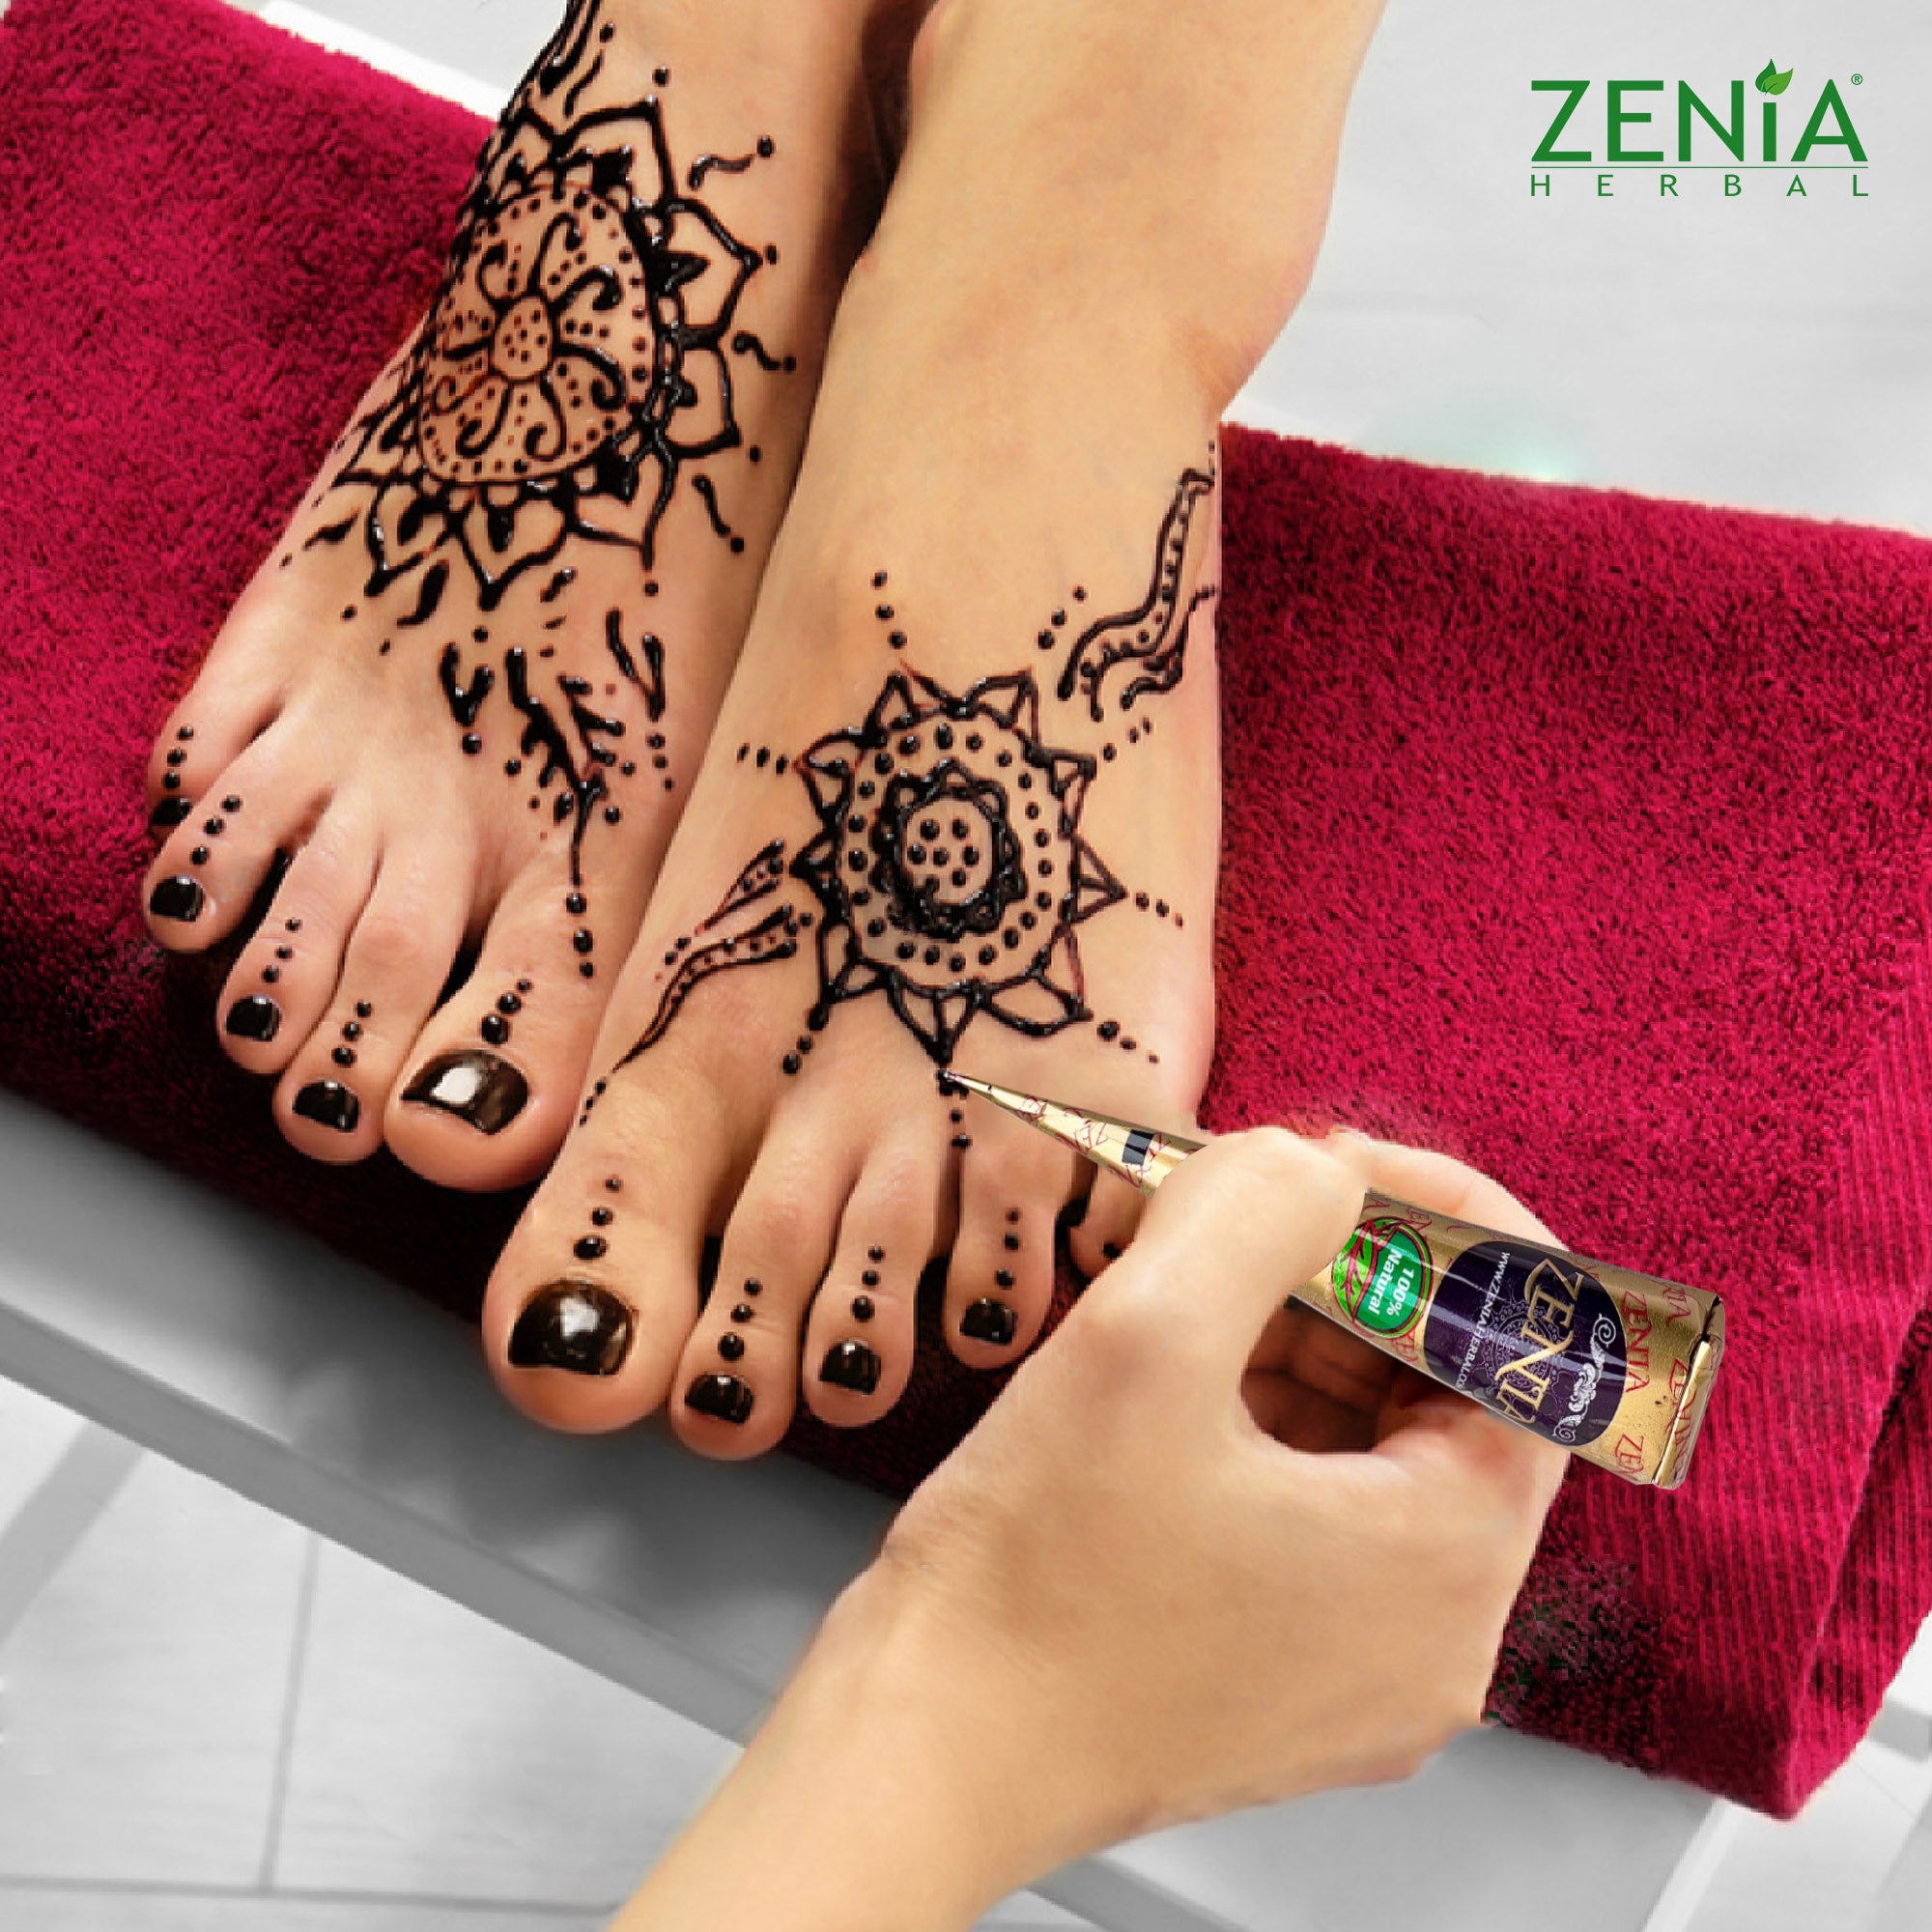 Zenia 100% Natural Henna Cones Mehndi Cones For Temporary Body Art Tattoo Freckles | Herbal Henna Paste Cones